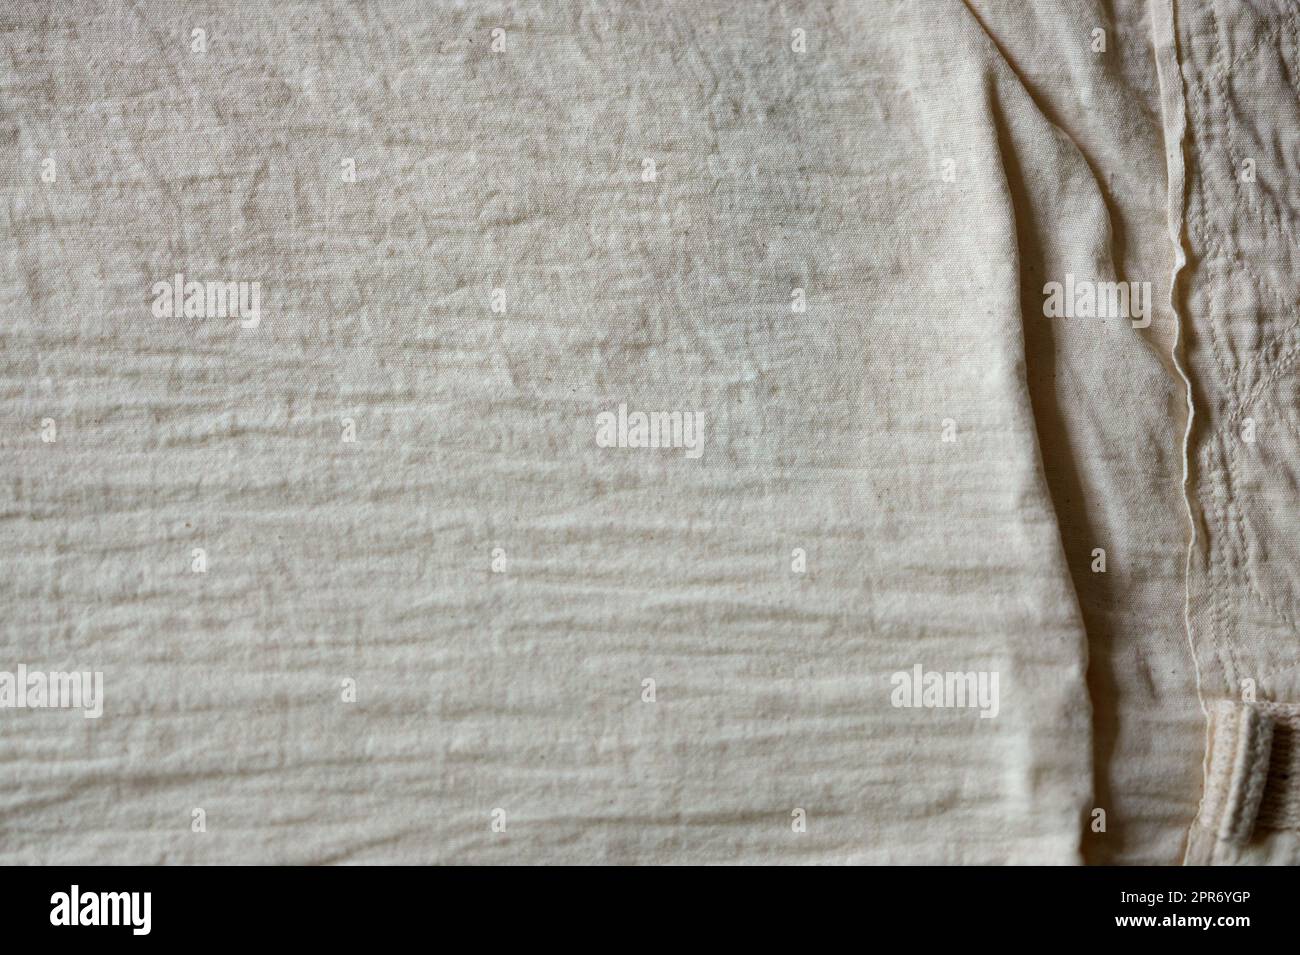 white fabric texture background Stock Photo